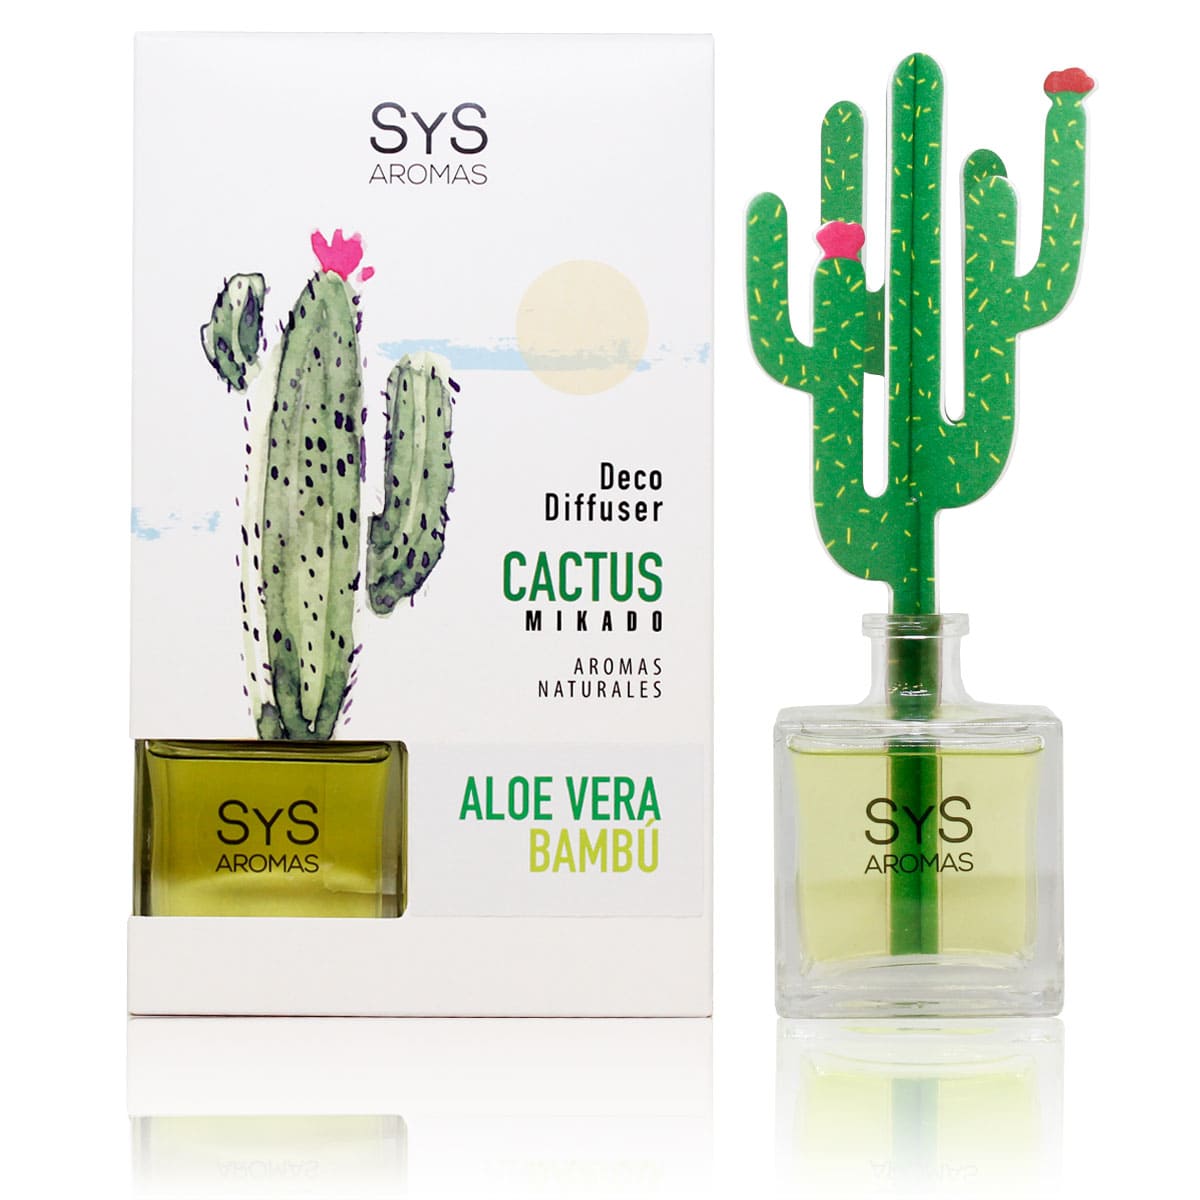 Buy Aloe Vera Bamboo Cactus Diffuser Air Freshener 90ml SYS Aromas